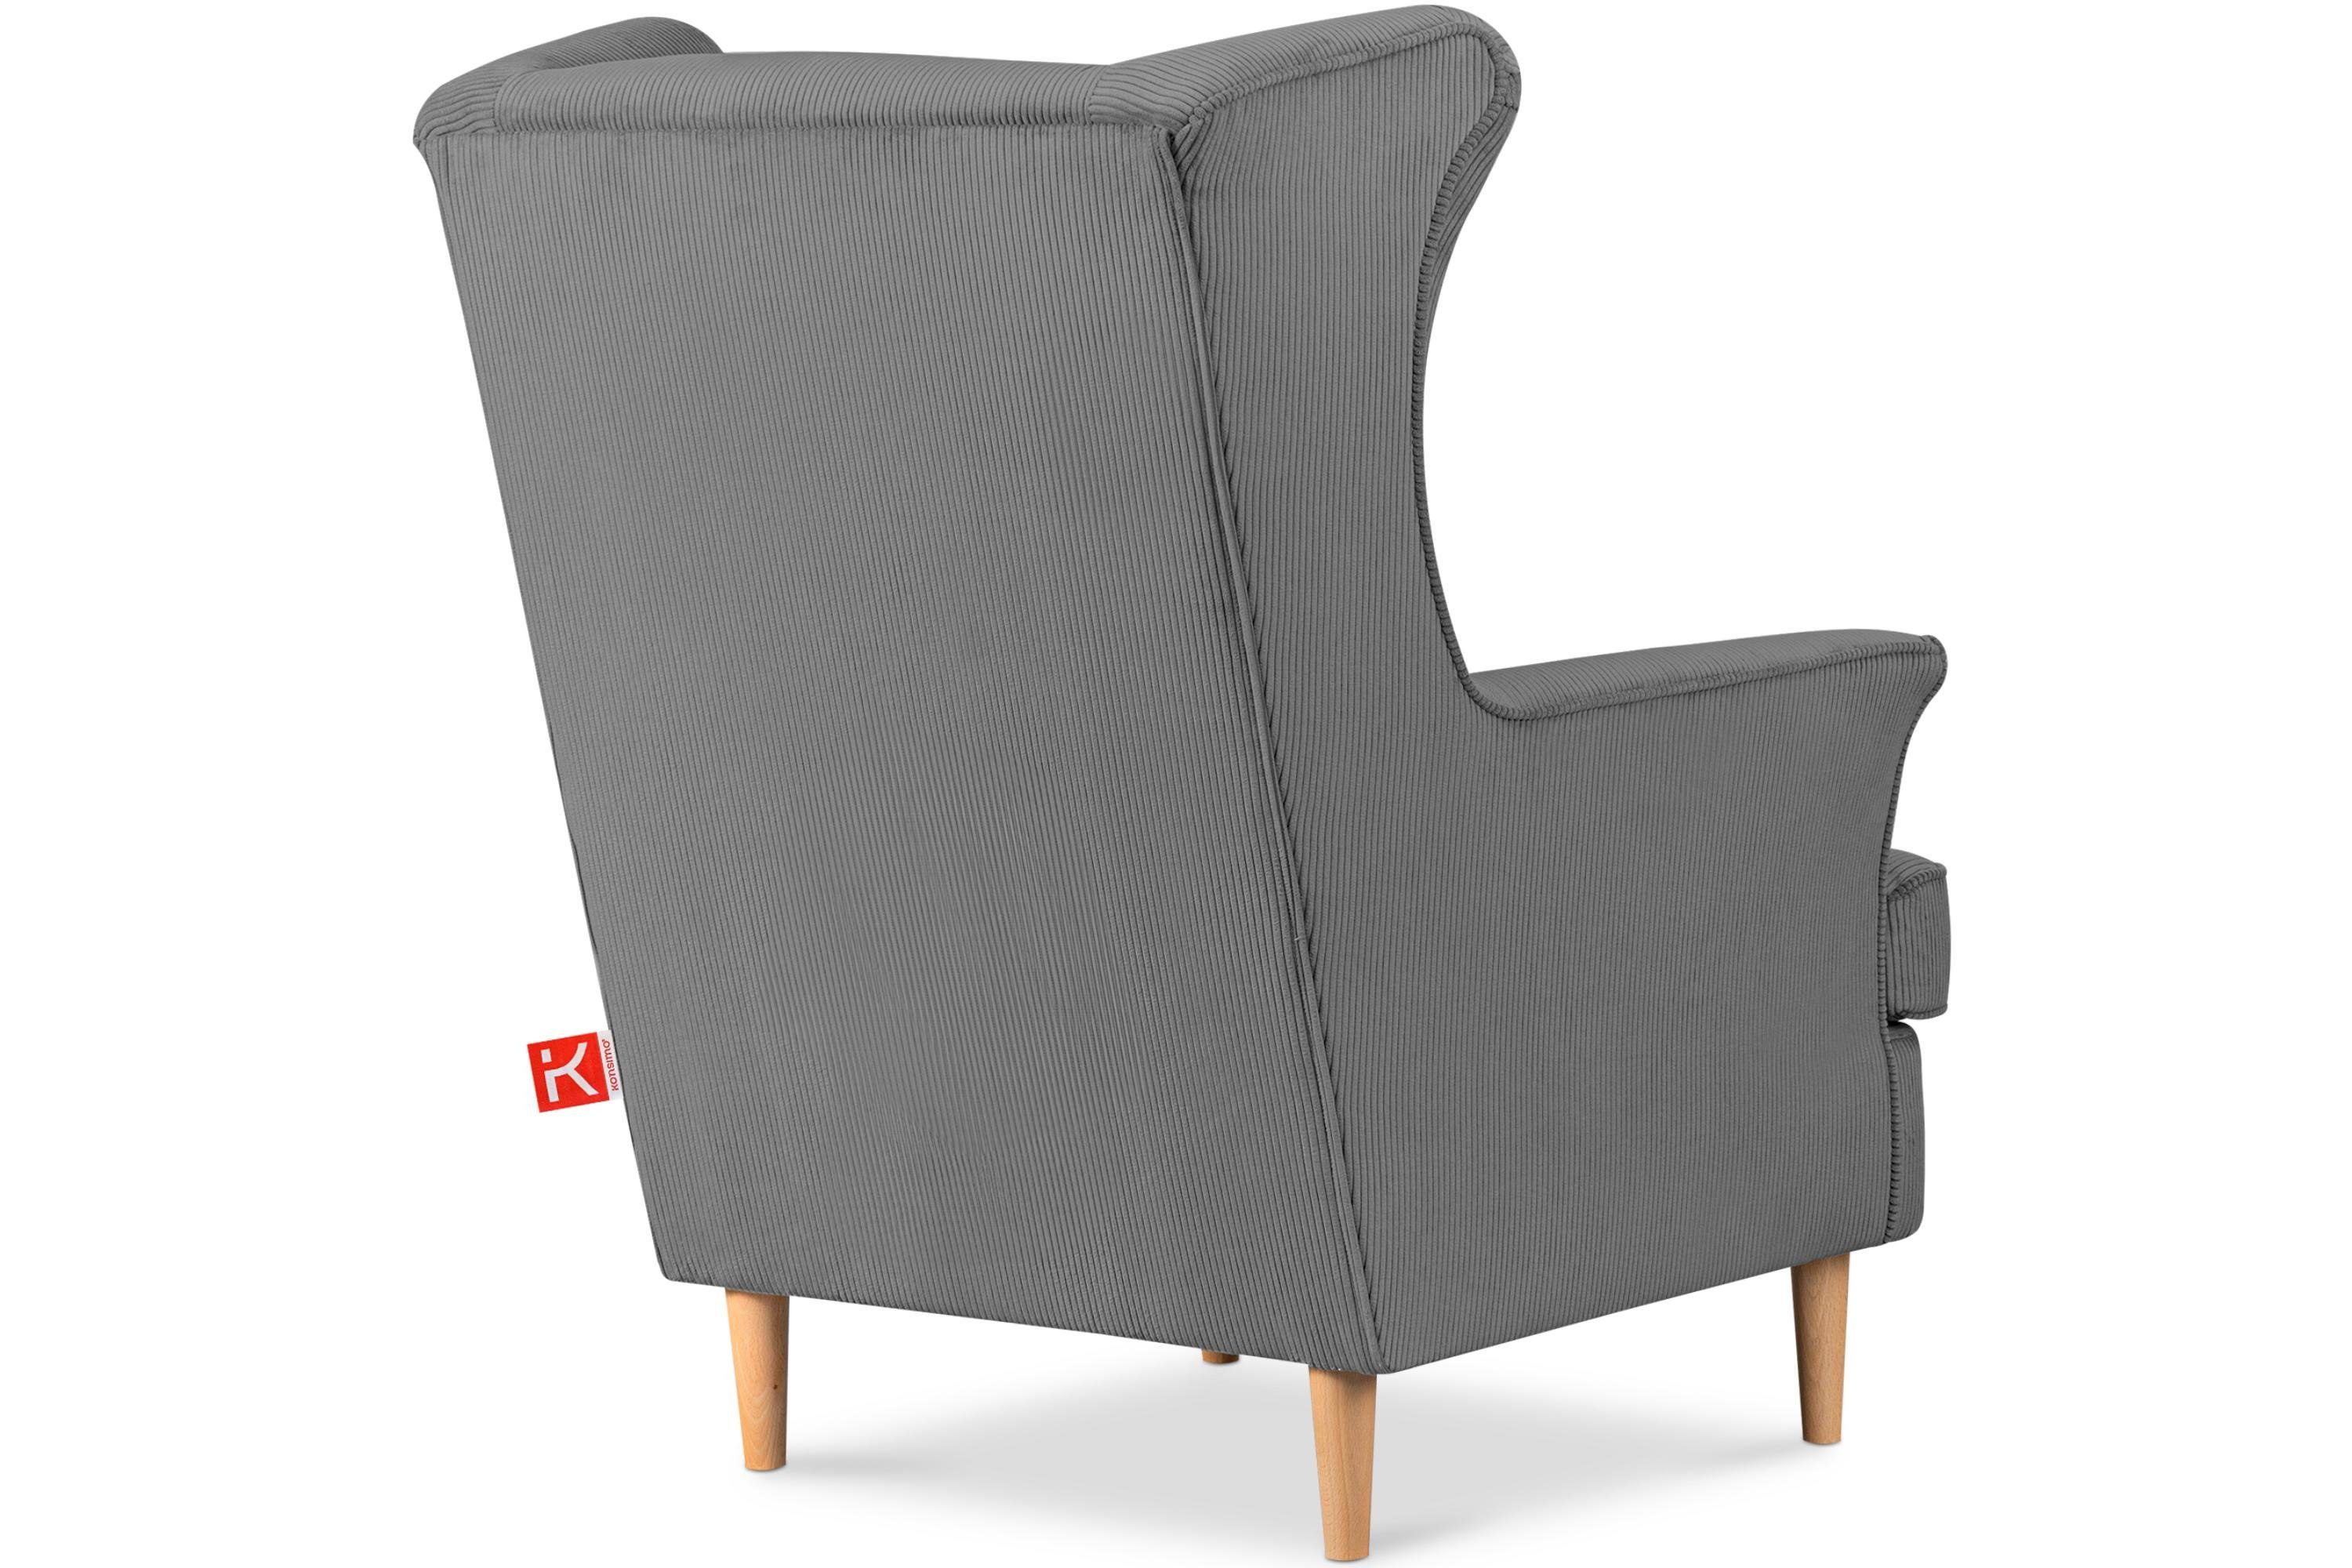 Konsimo Ohrensessel Sessel, dekorativem zeitloses Füße, STRALIS Design, inklusive Kissen hohe